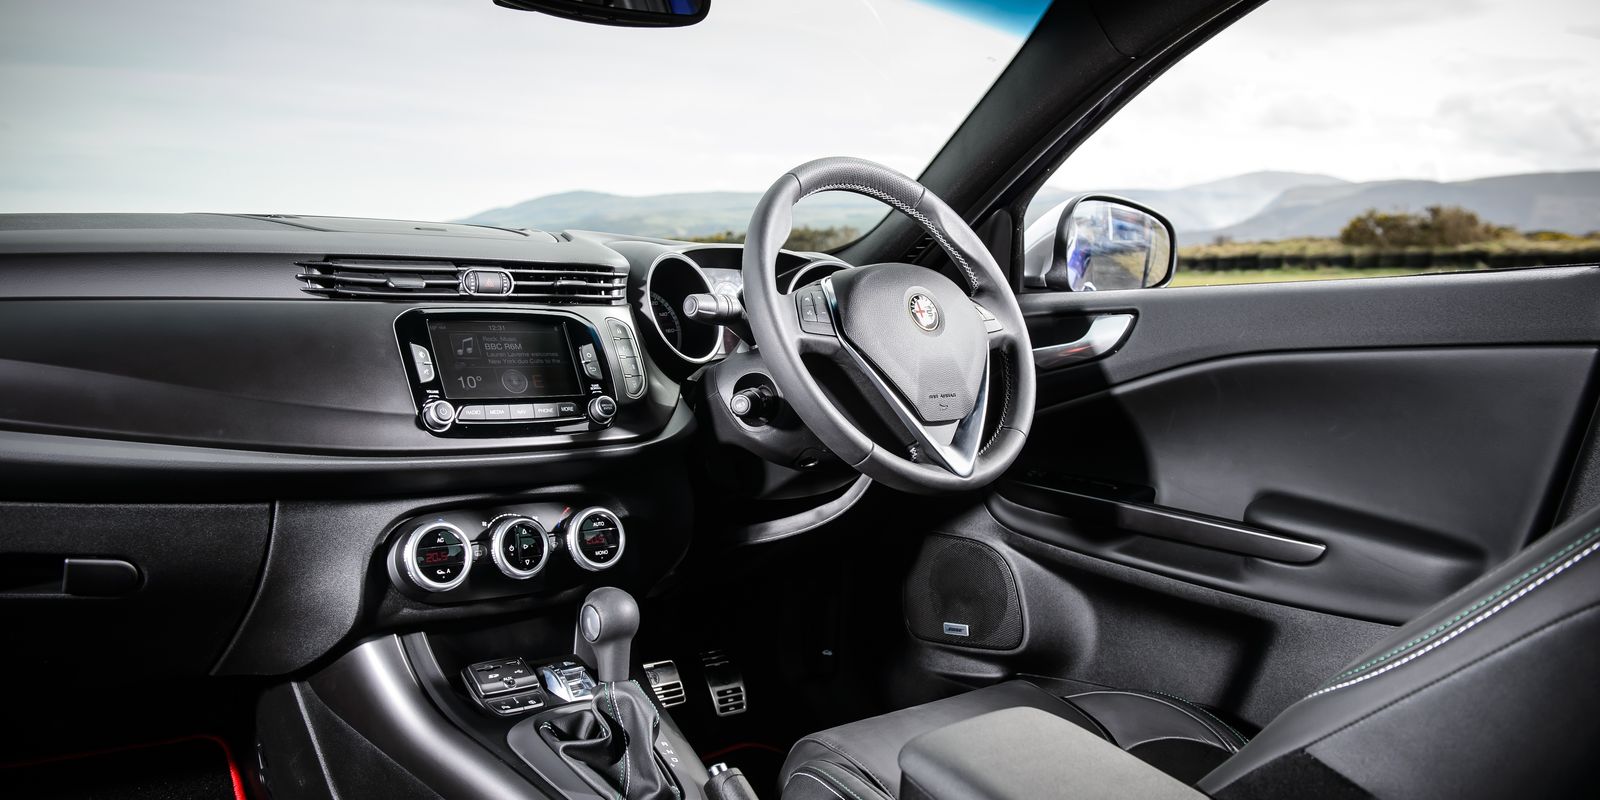 http://www.littlegatepublishing.com/wp-content/uploads/2015/09/Interior-Alfa-Romeo-Giulietta.jpg